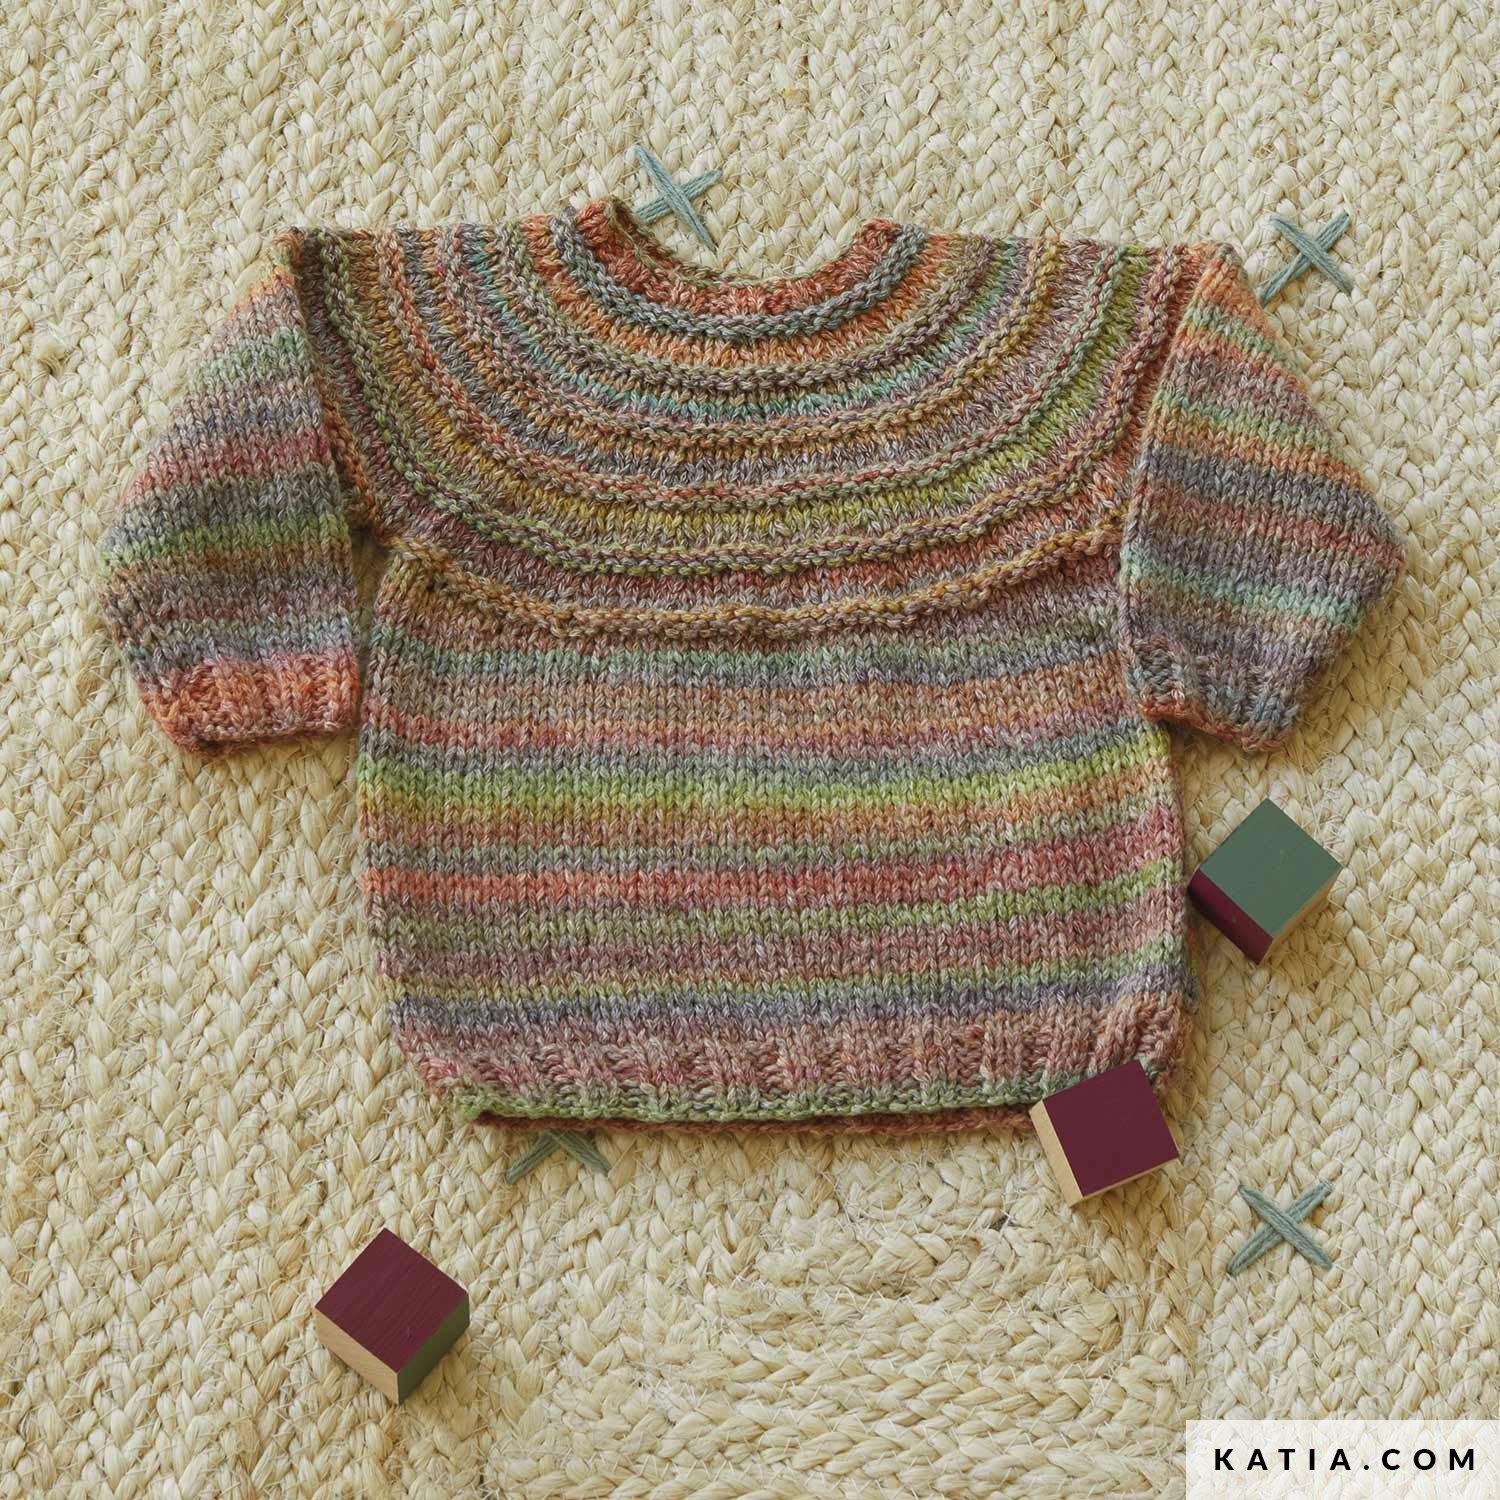 Sweater - Baby - Autumn / Winter - models & patterns